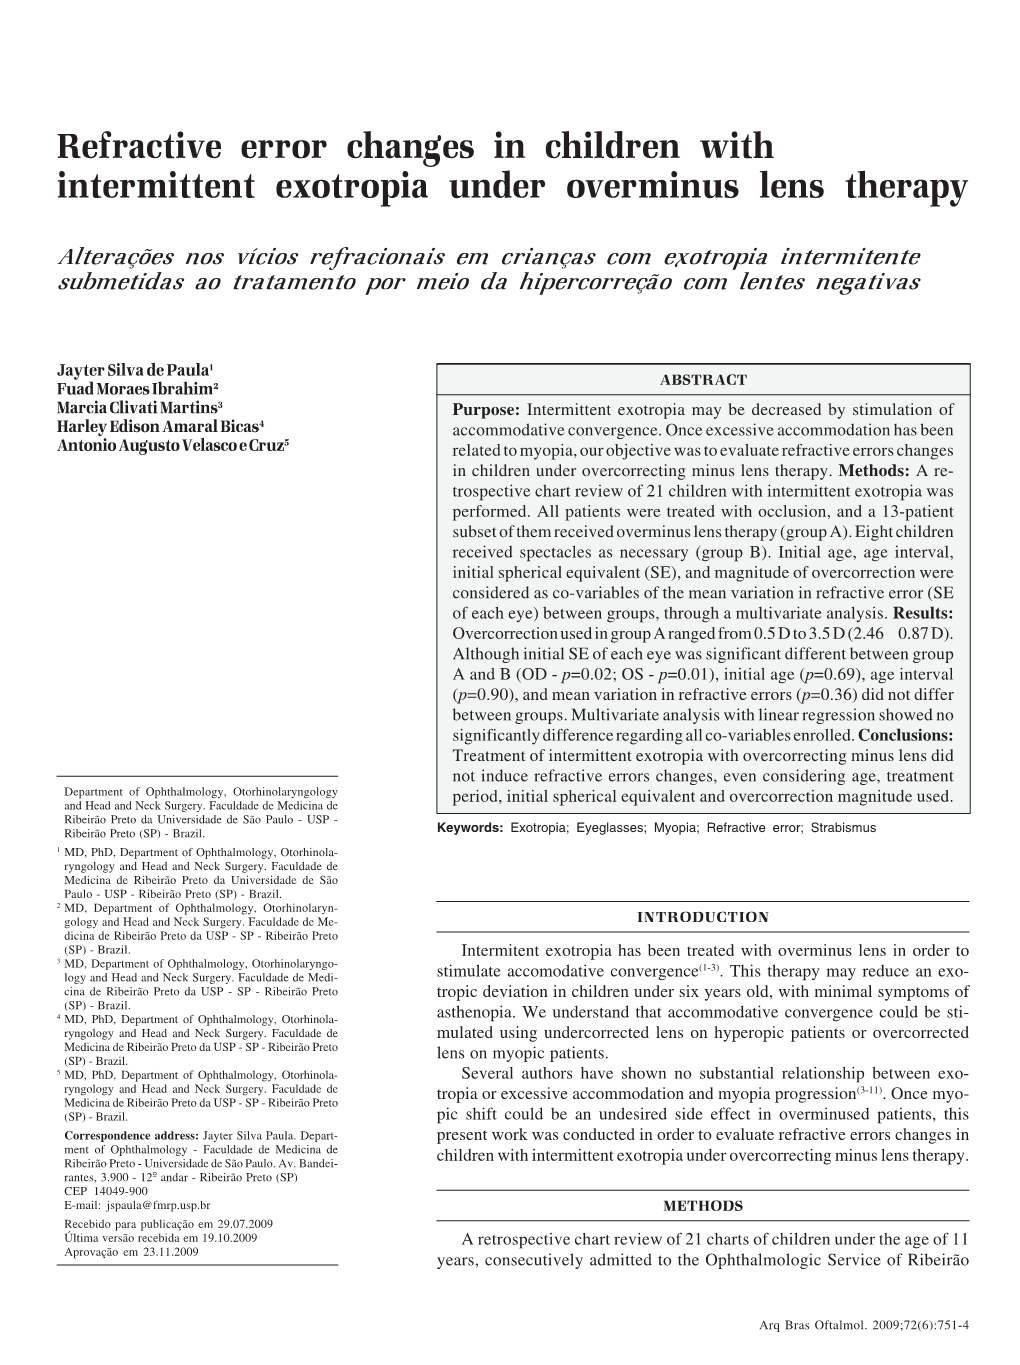 Refractive Error Changes in Children with Intermittent Exotropia Under Overminus Lens Therapy